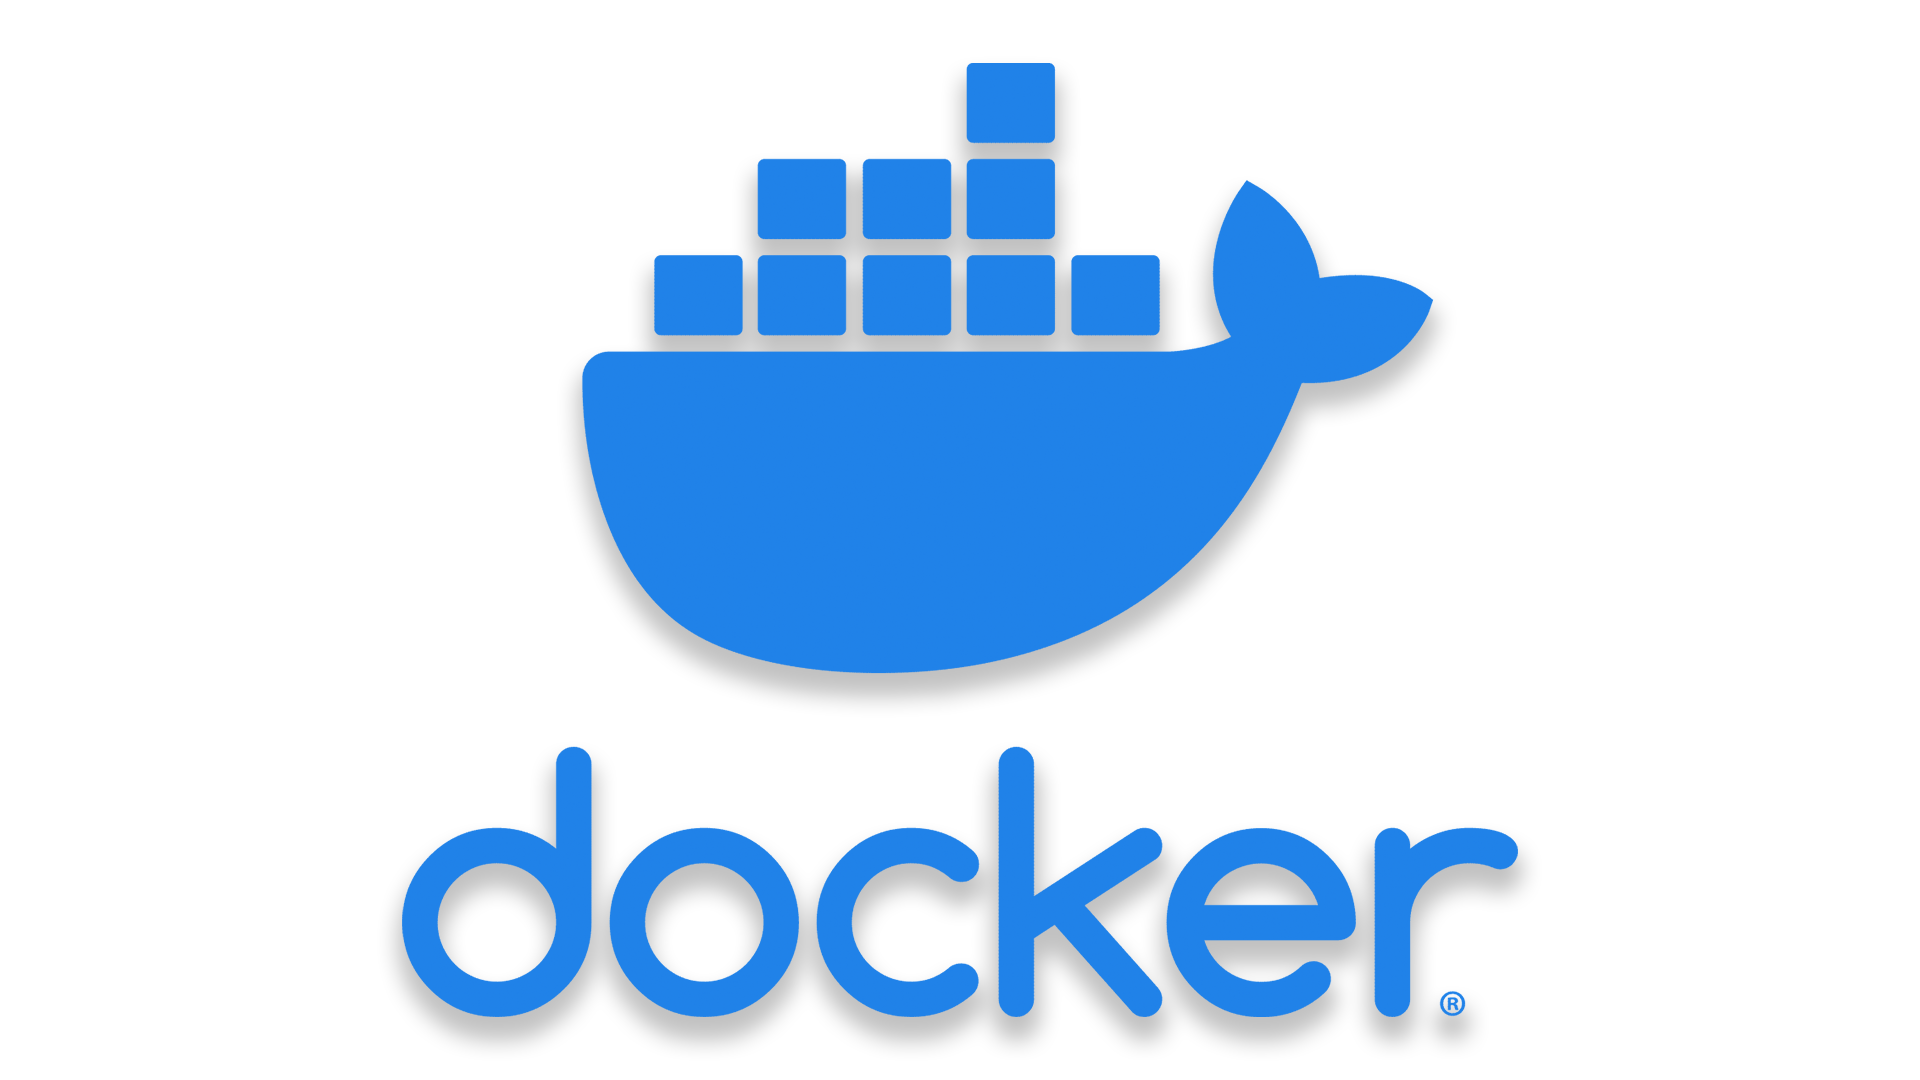 The Docker logo on a white background.